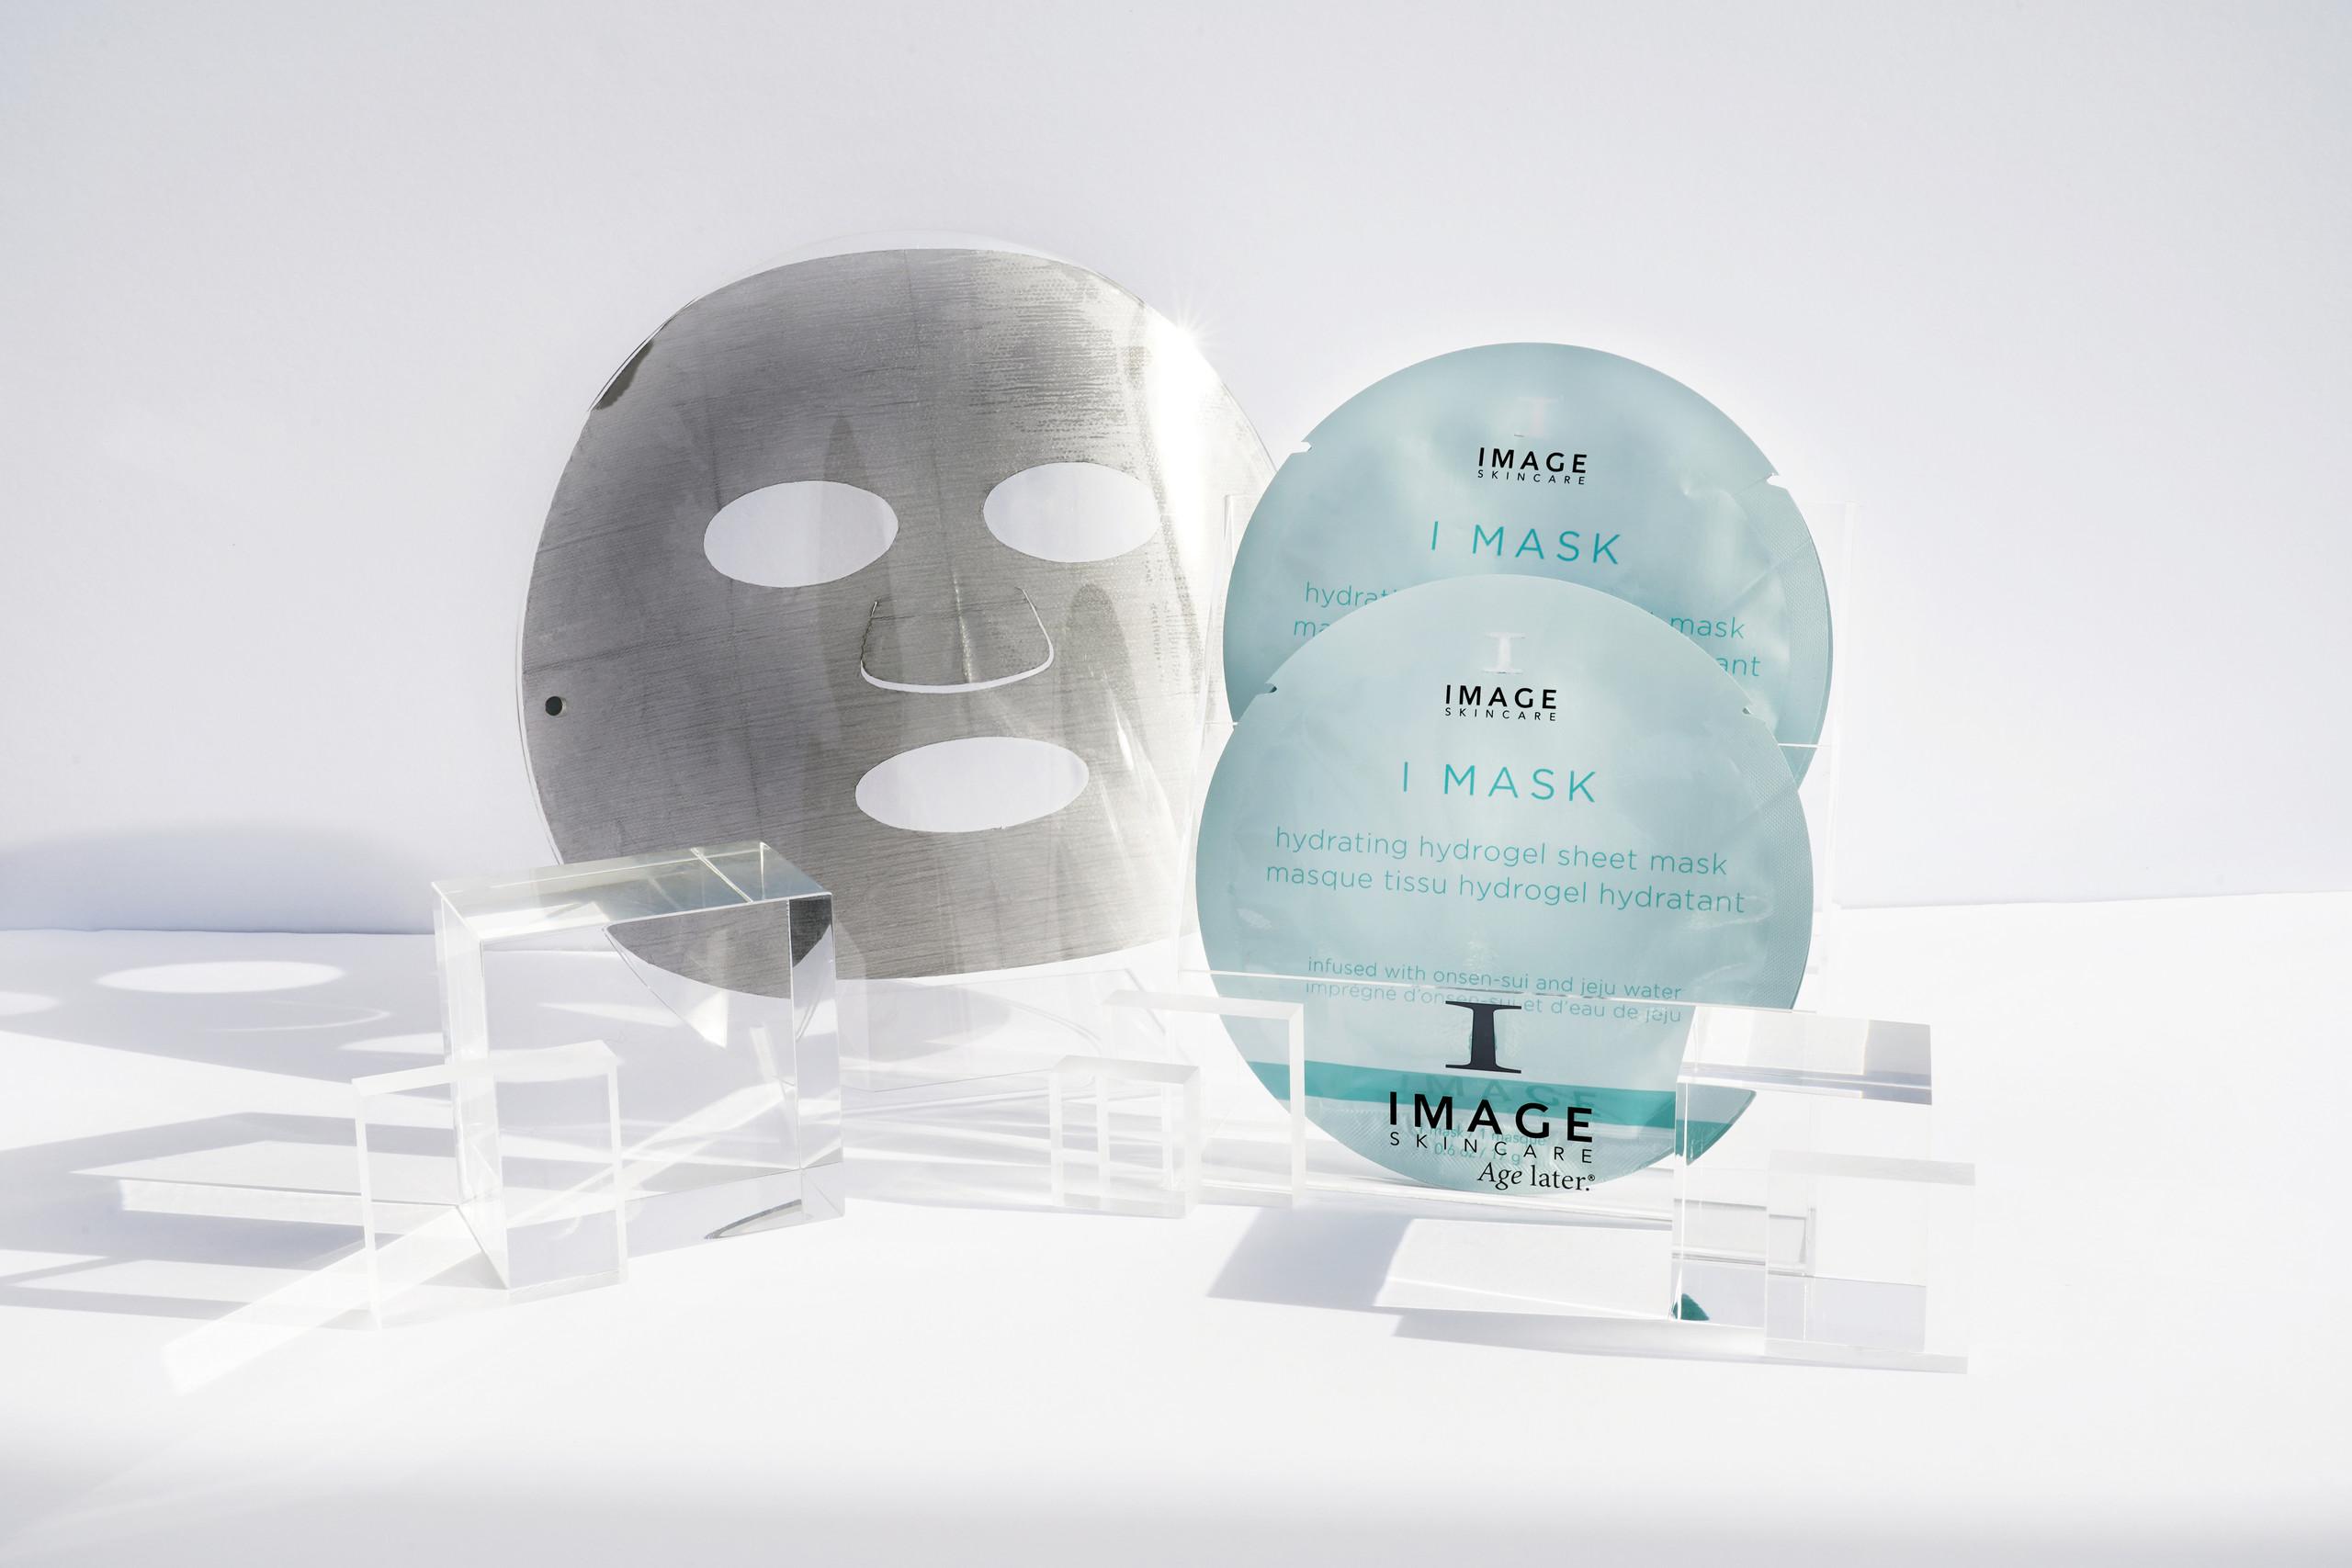 Гидрогелевую маску купить. I Mask Hydrating Hydrogel Sheet Mask. Image Skincare гидрогелевая маска. Маска для лица image Anti-Aging gidrogel Sheet Mask. Маска image Skincare тканевые.